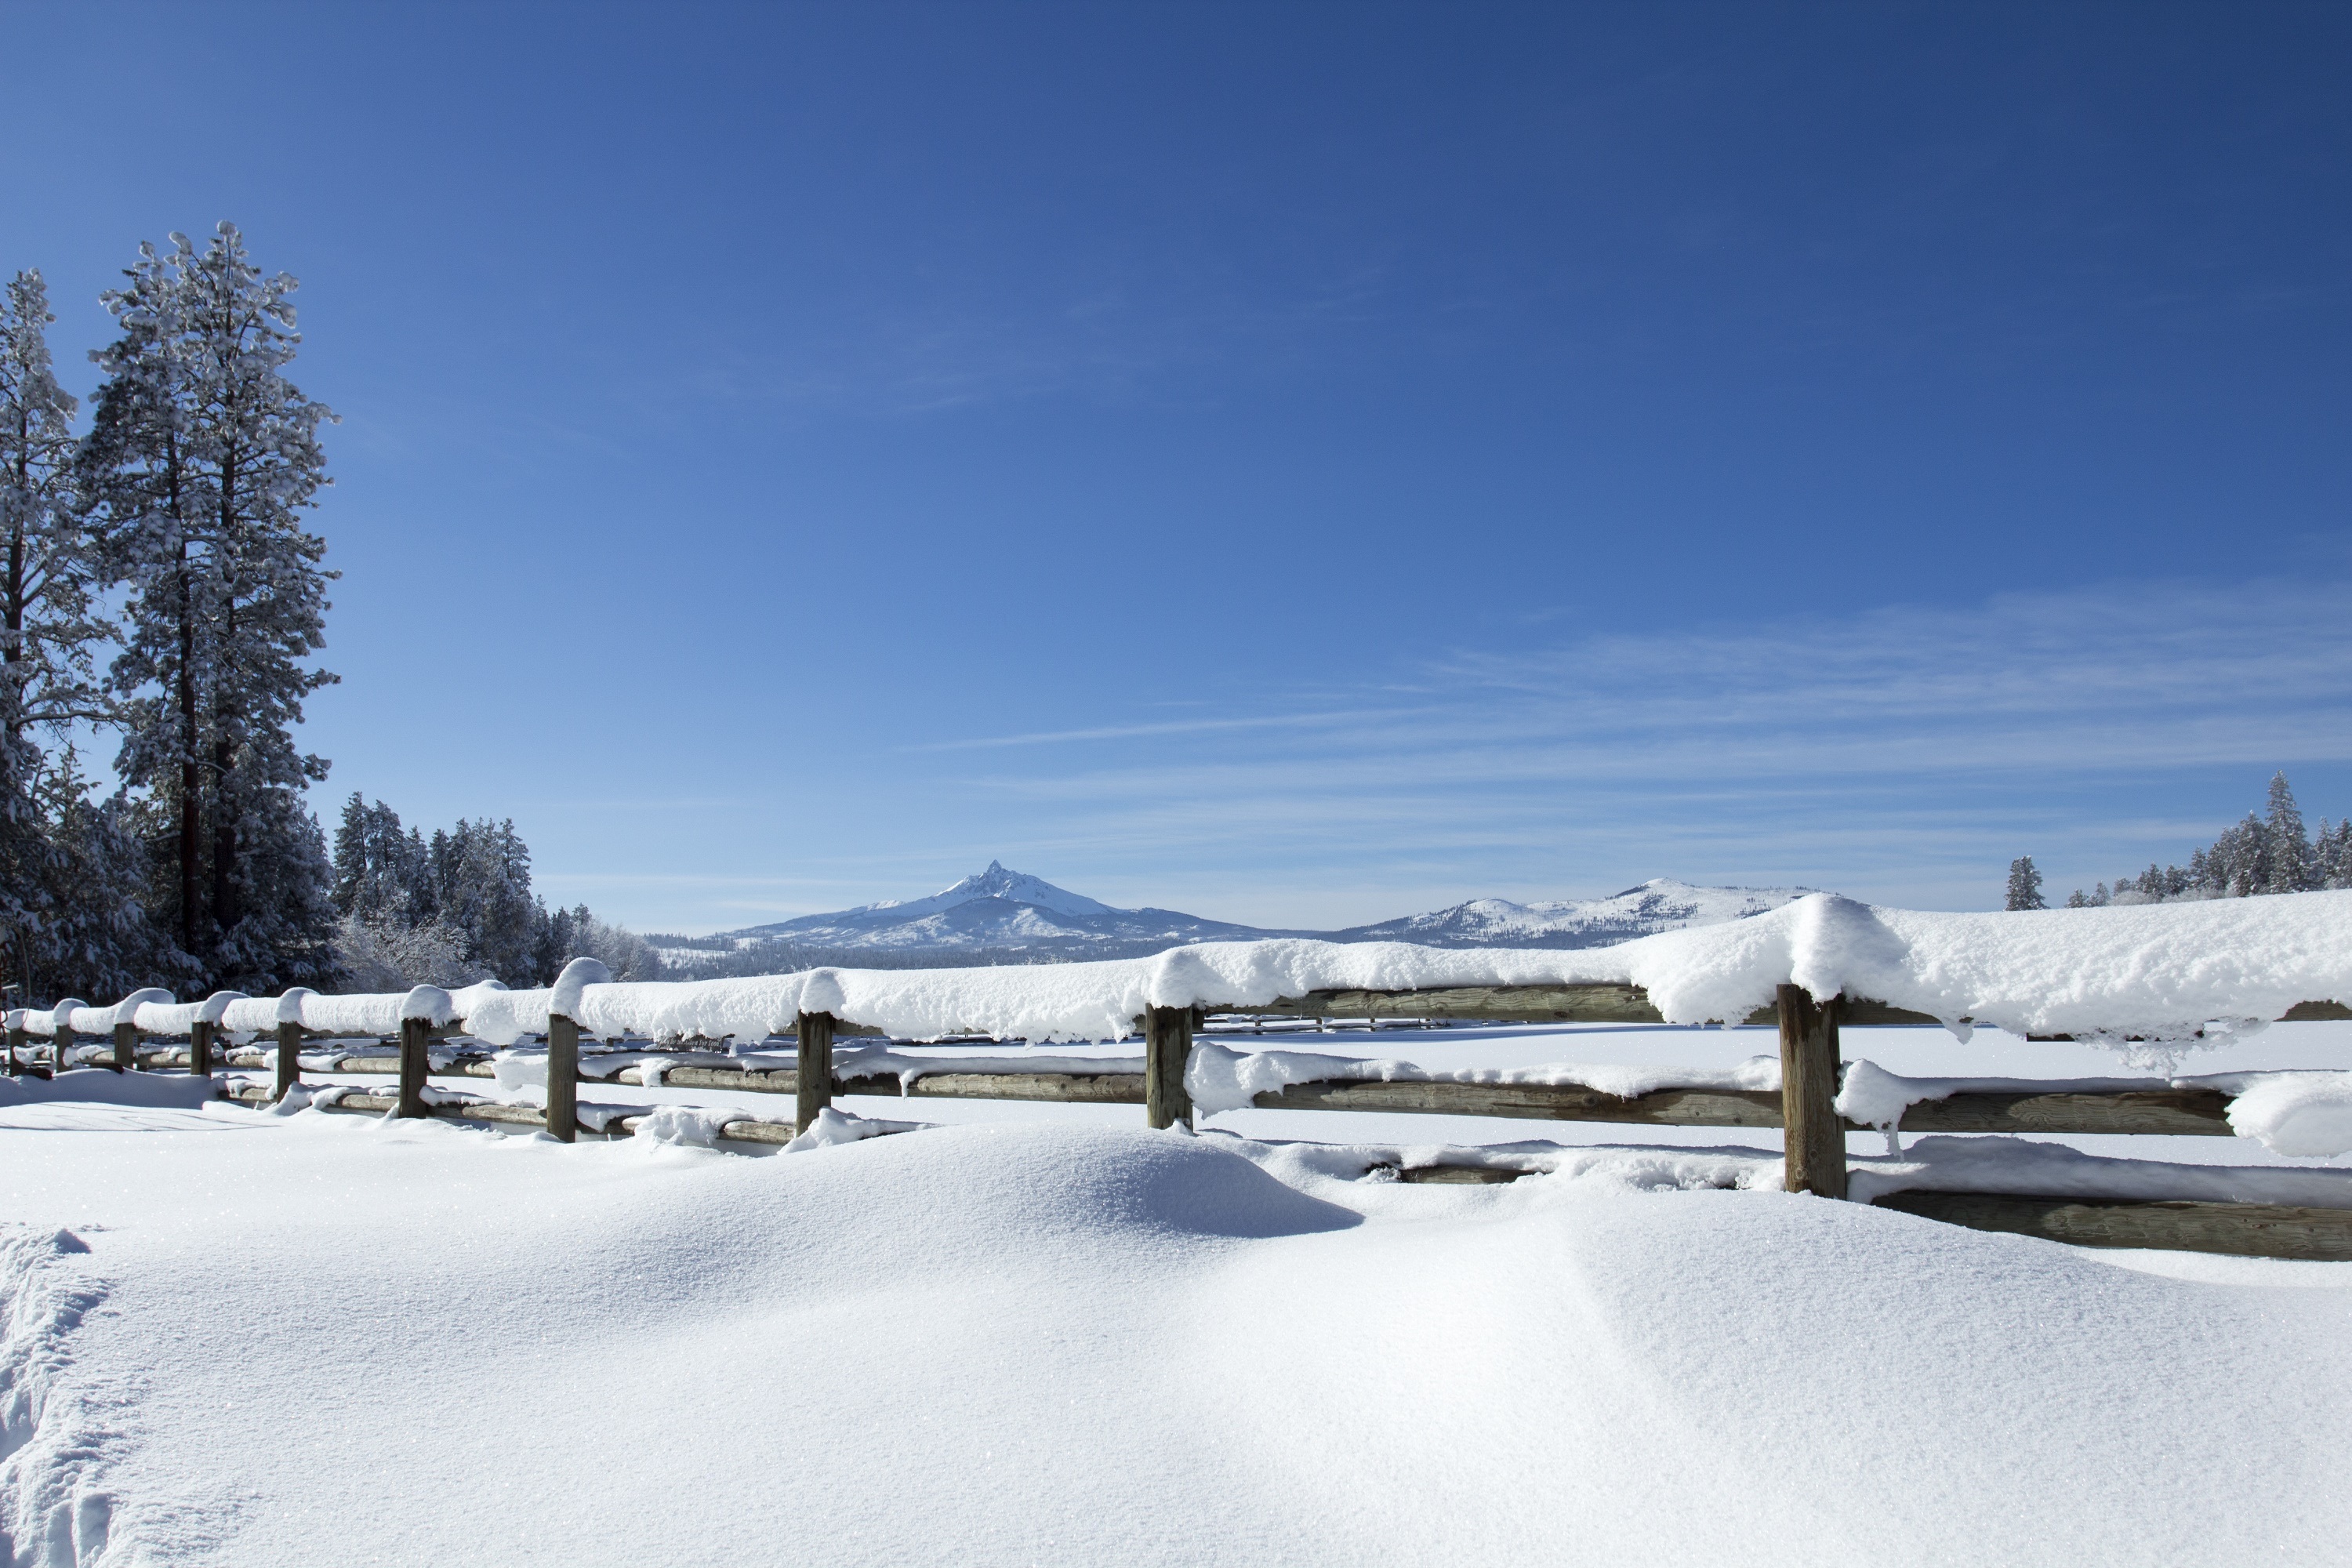 polk county oregon scenery winter